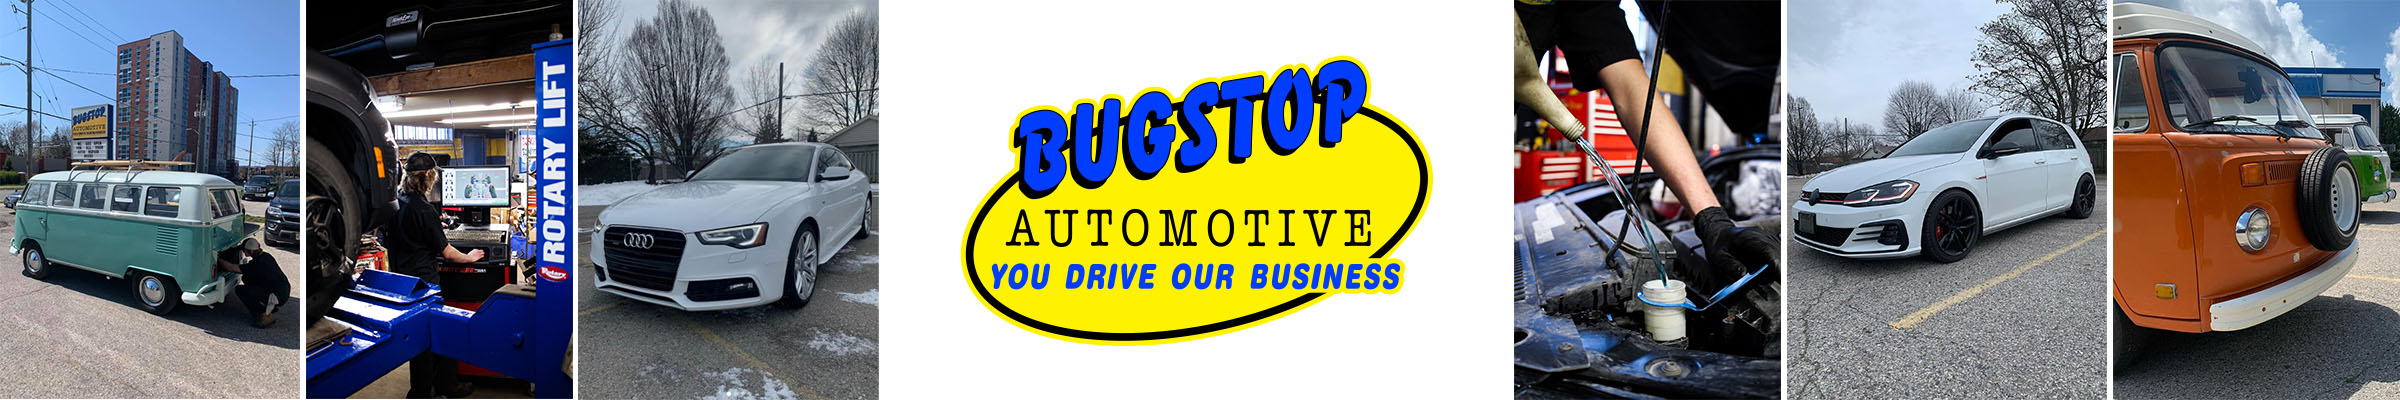 Bugstop Automotive